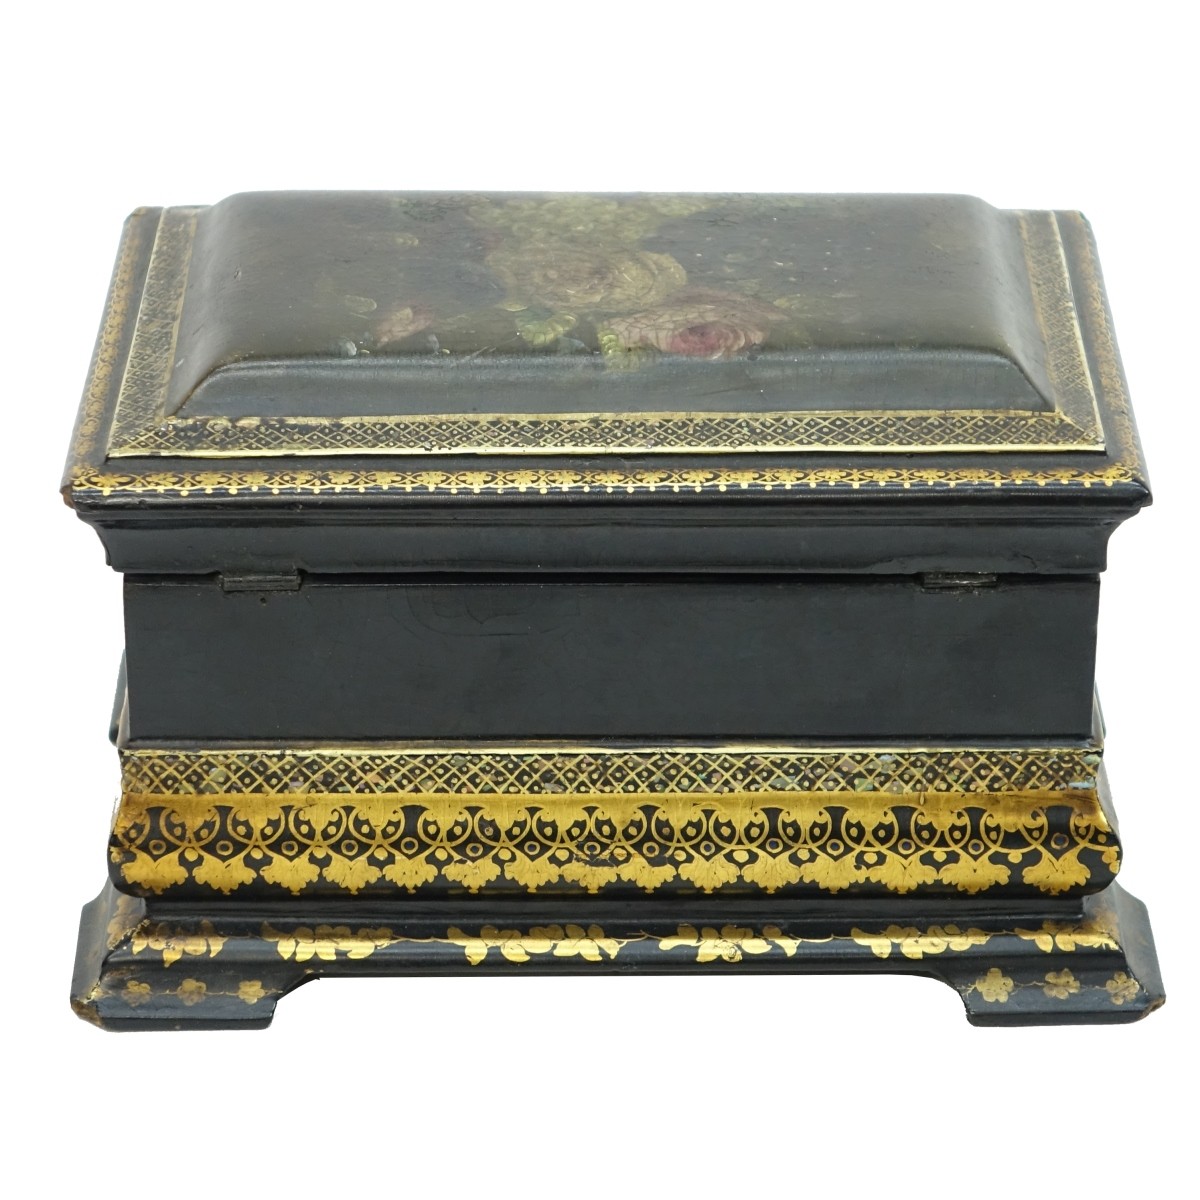 Antique English Black Lacquer Tea Caddy